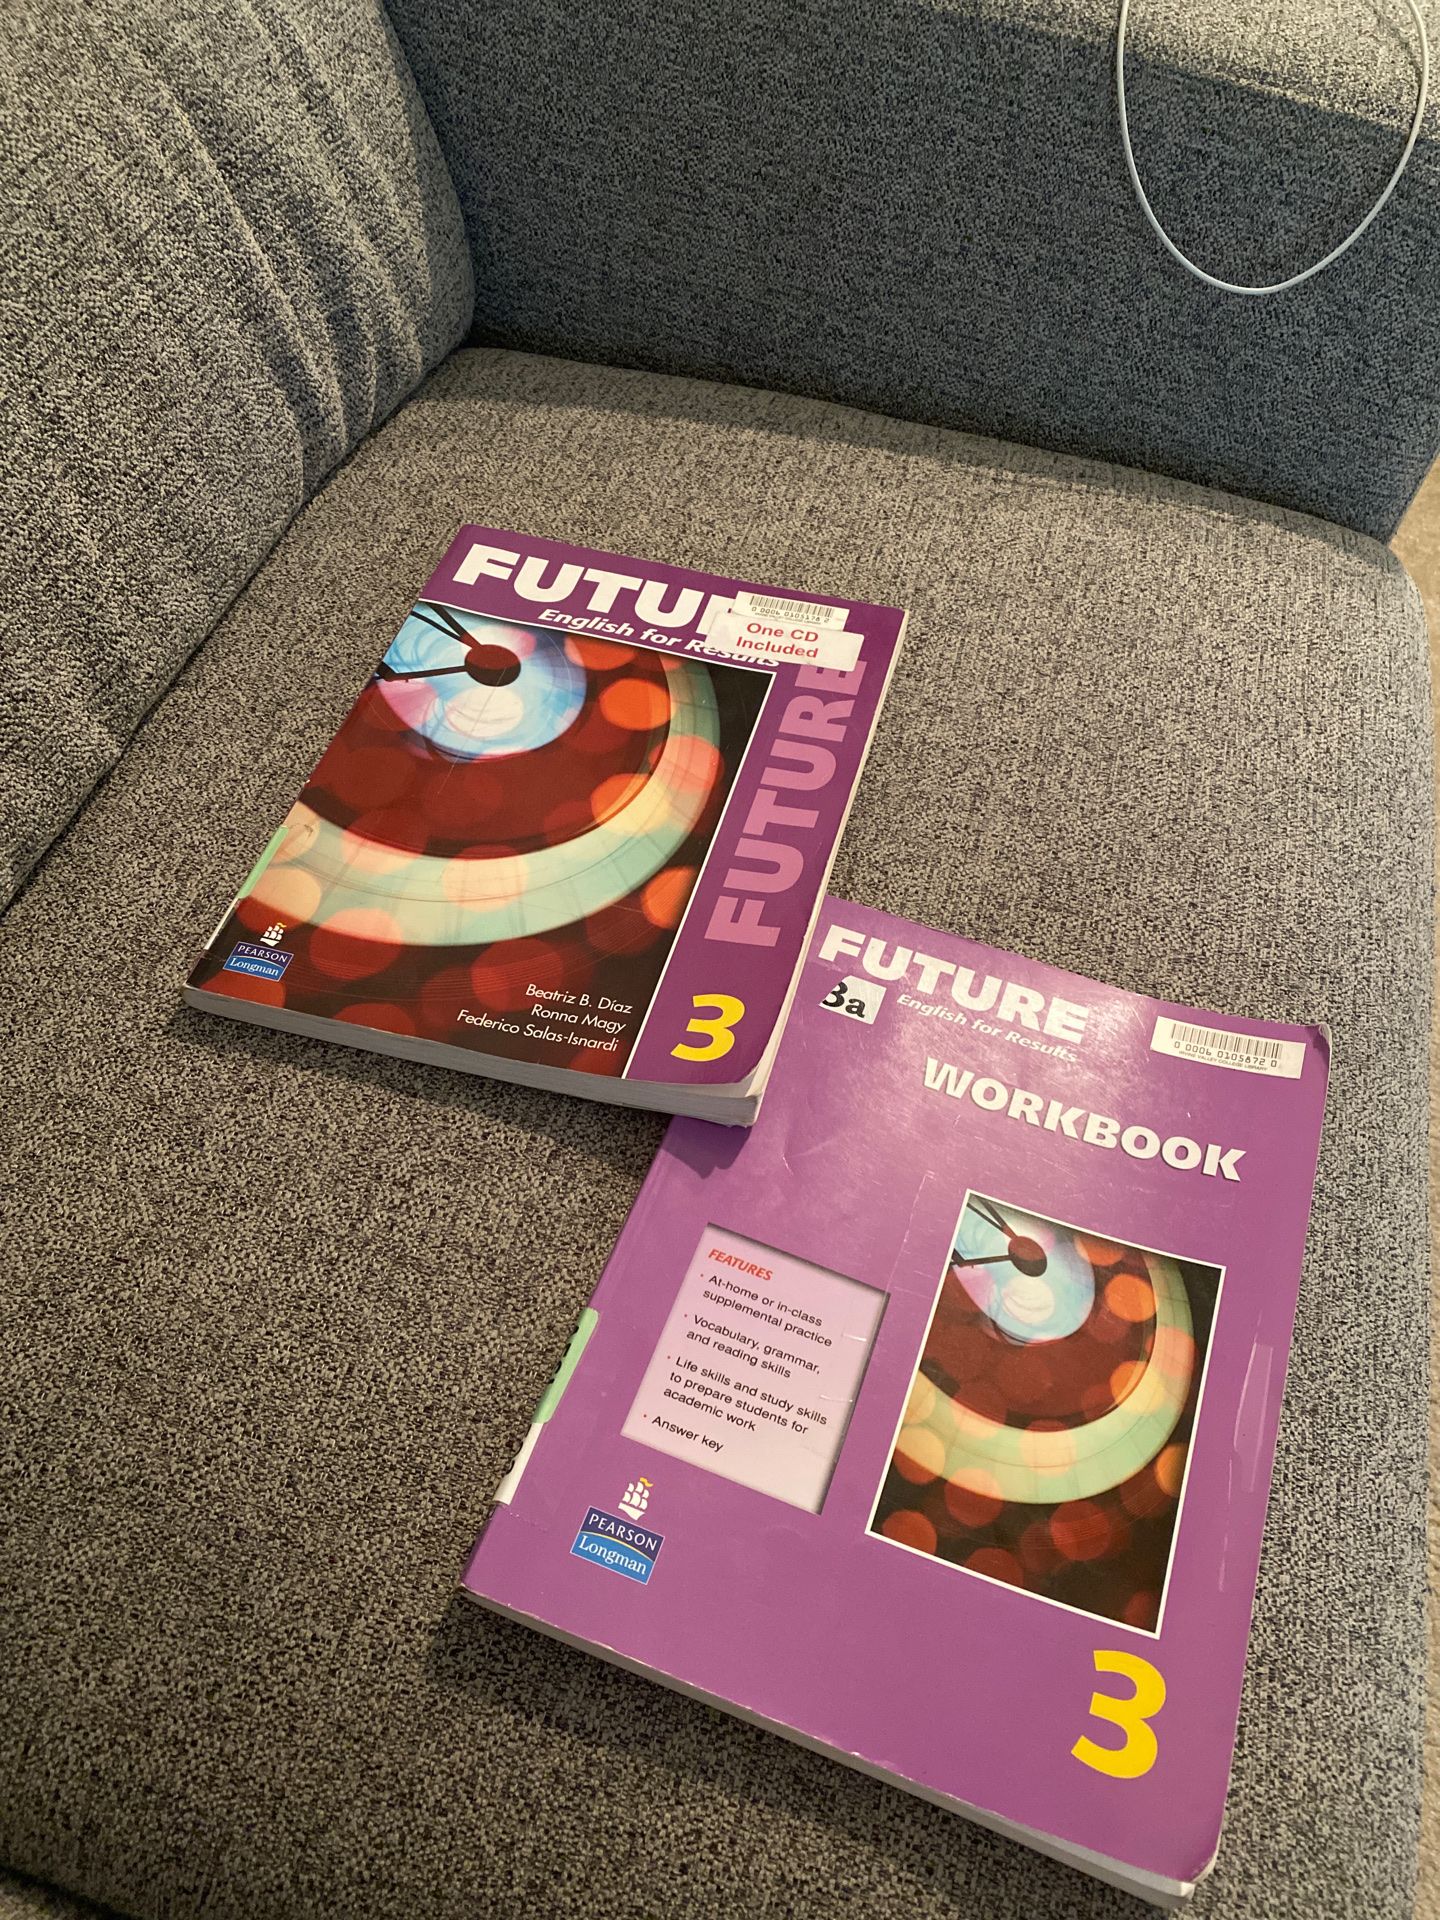 Future 3 English book and workbook